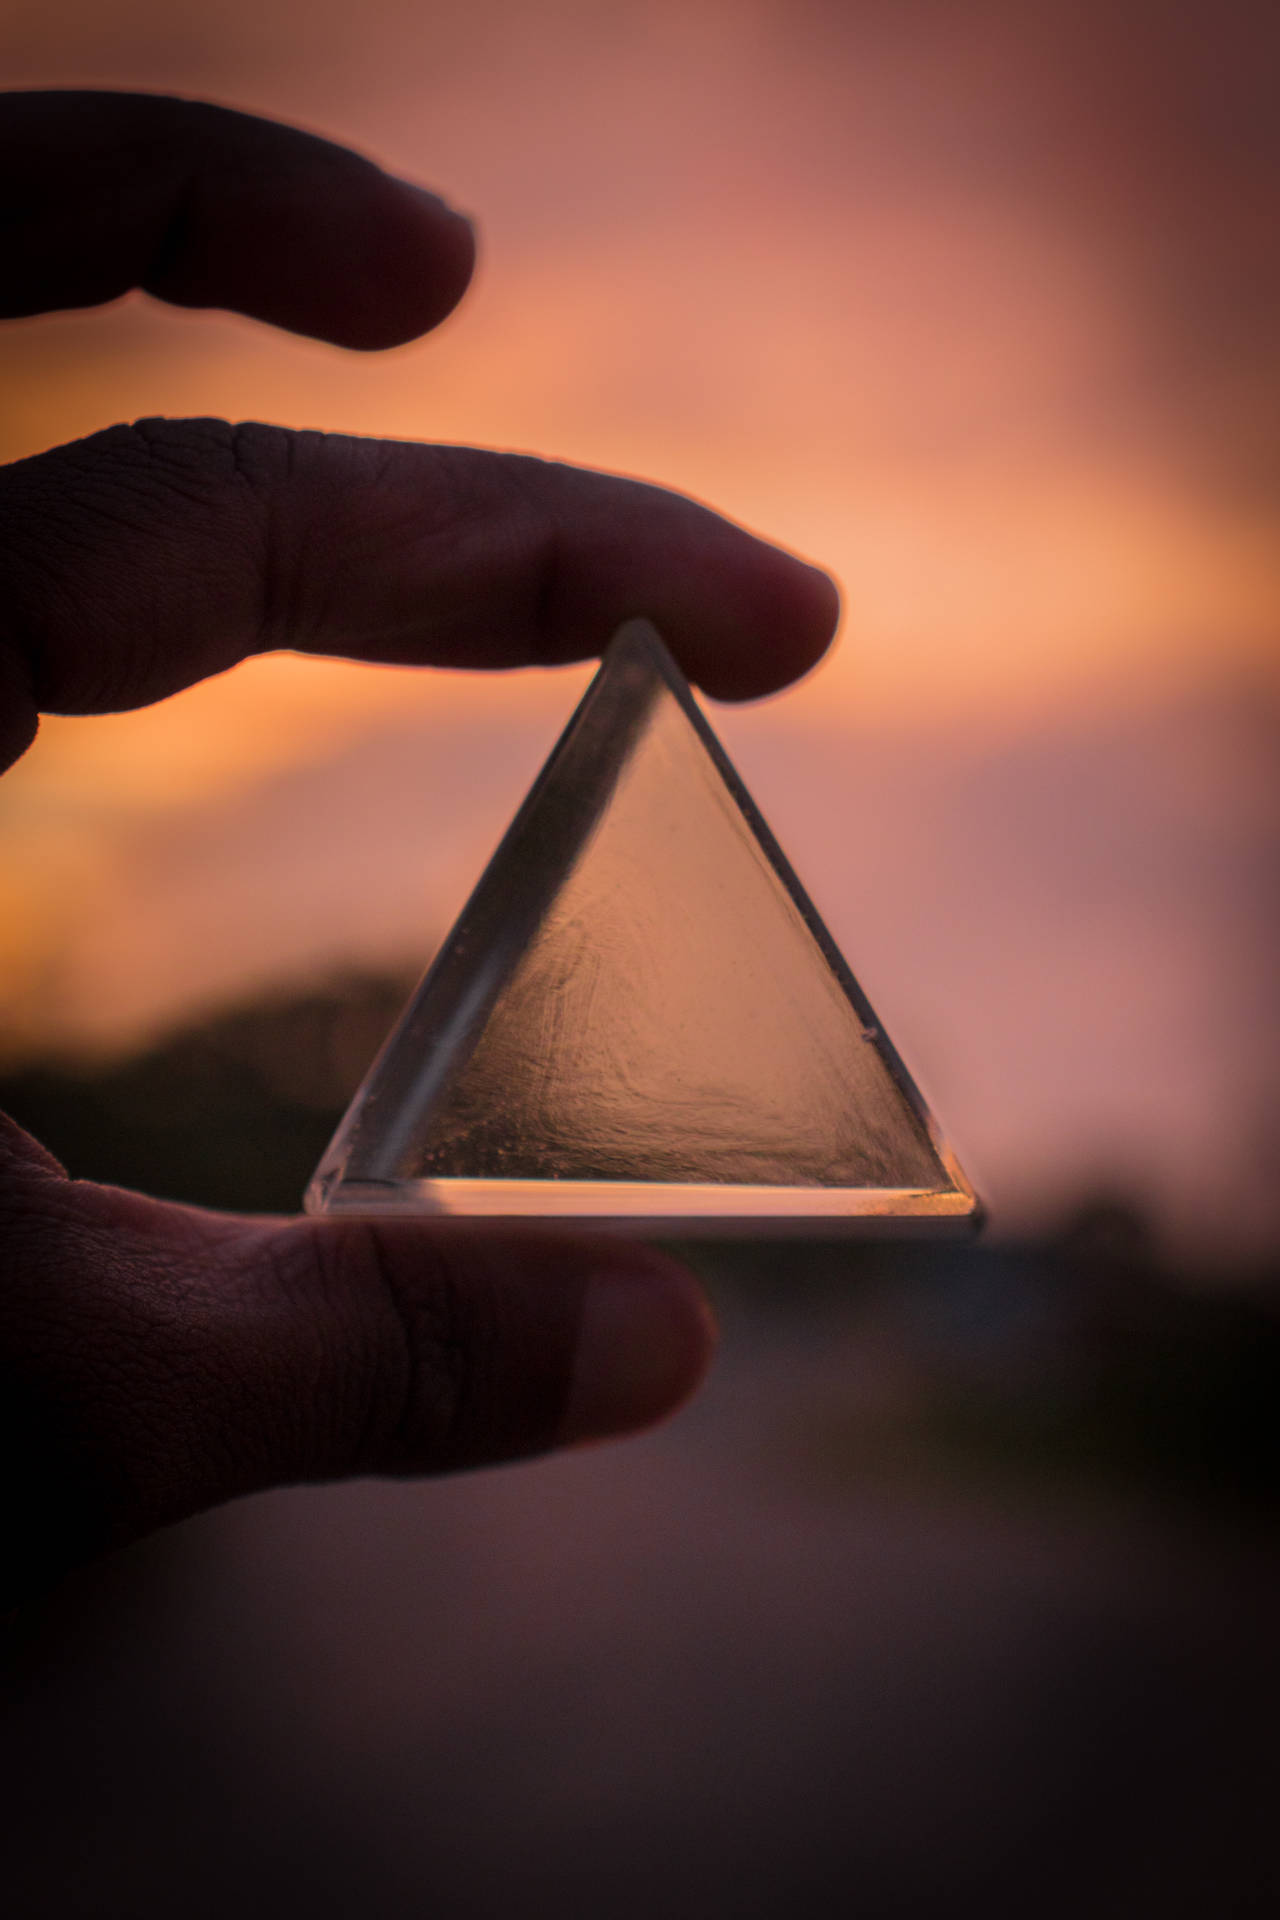 Triangular Glass Prism Background